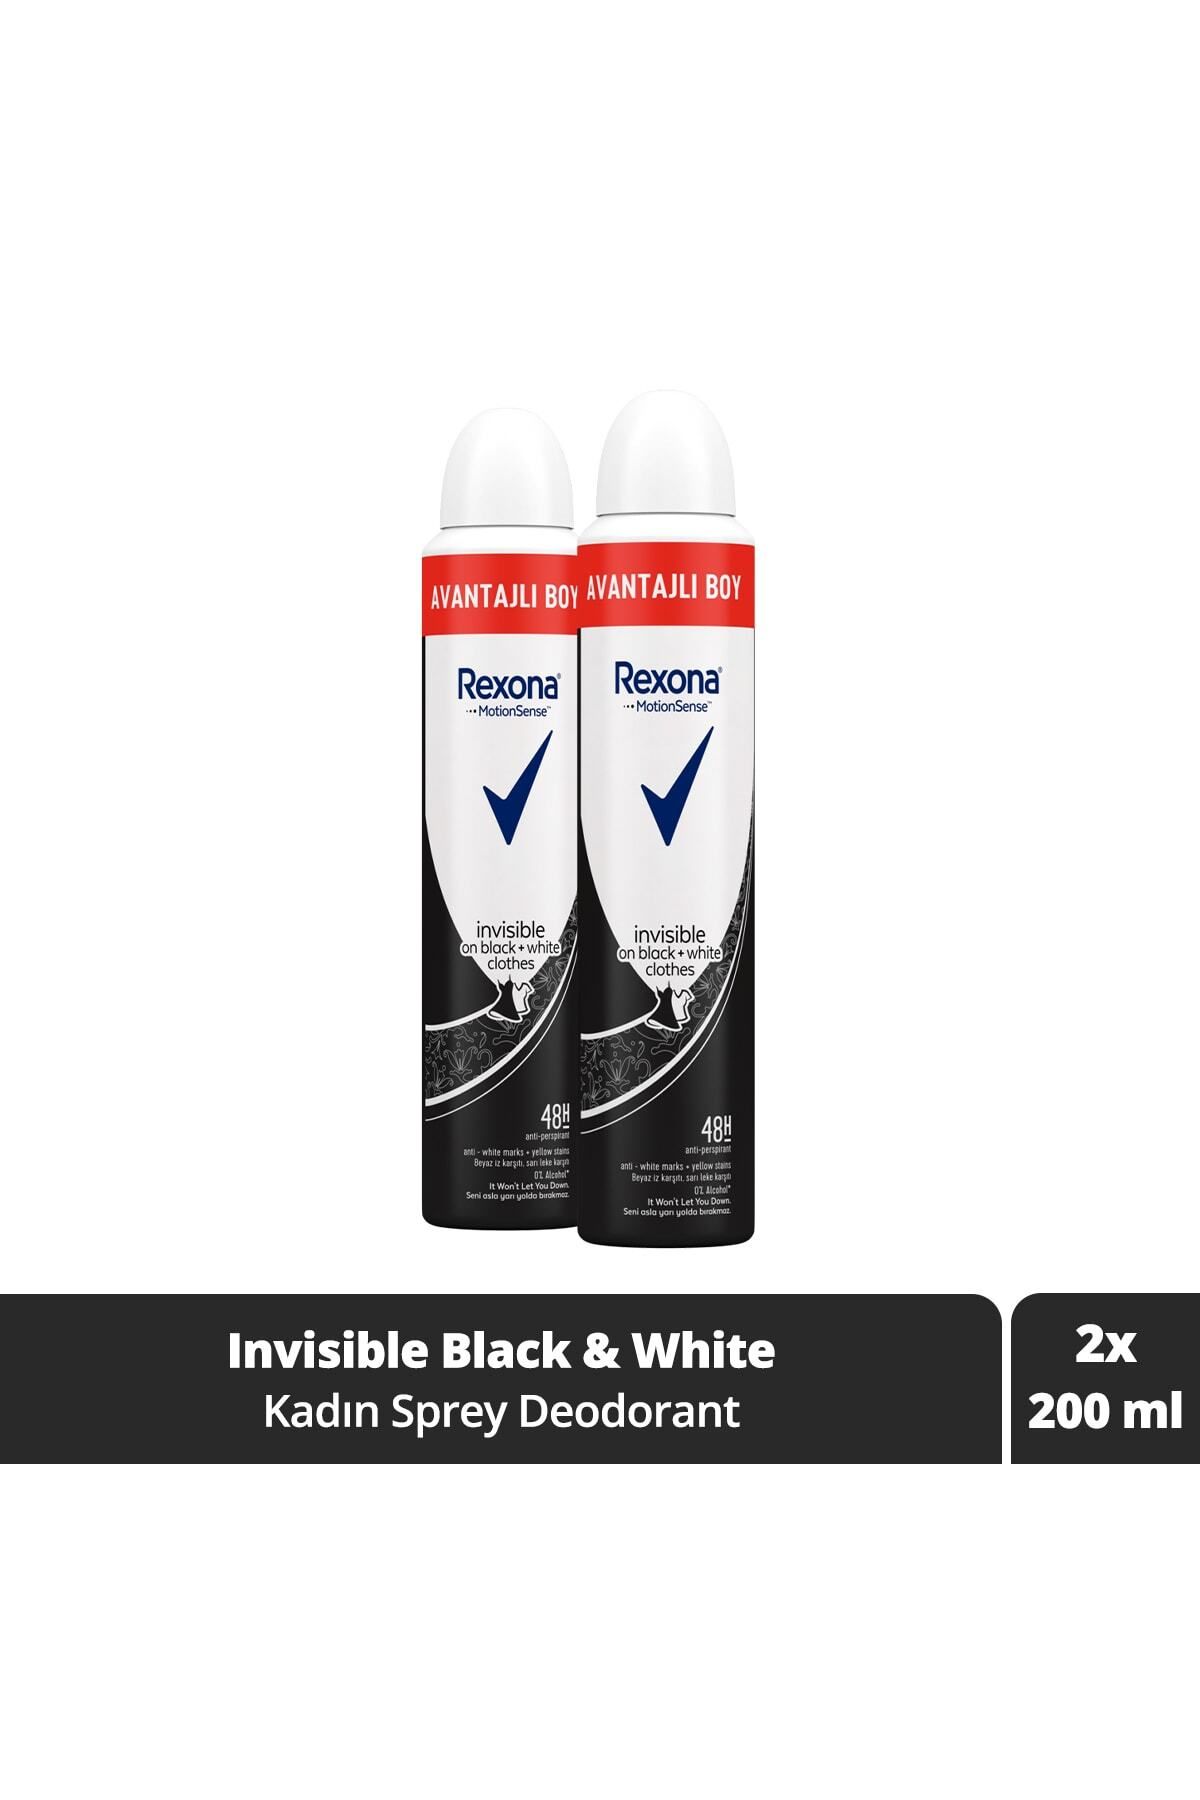 Rexona Kadın Sprey Deodorant Invisible On Black + White Clothes Avantajlı Boy 200 ml x2 Adet